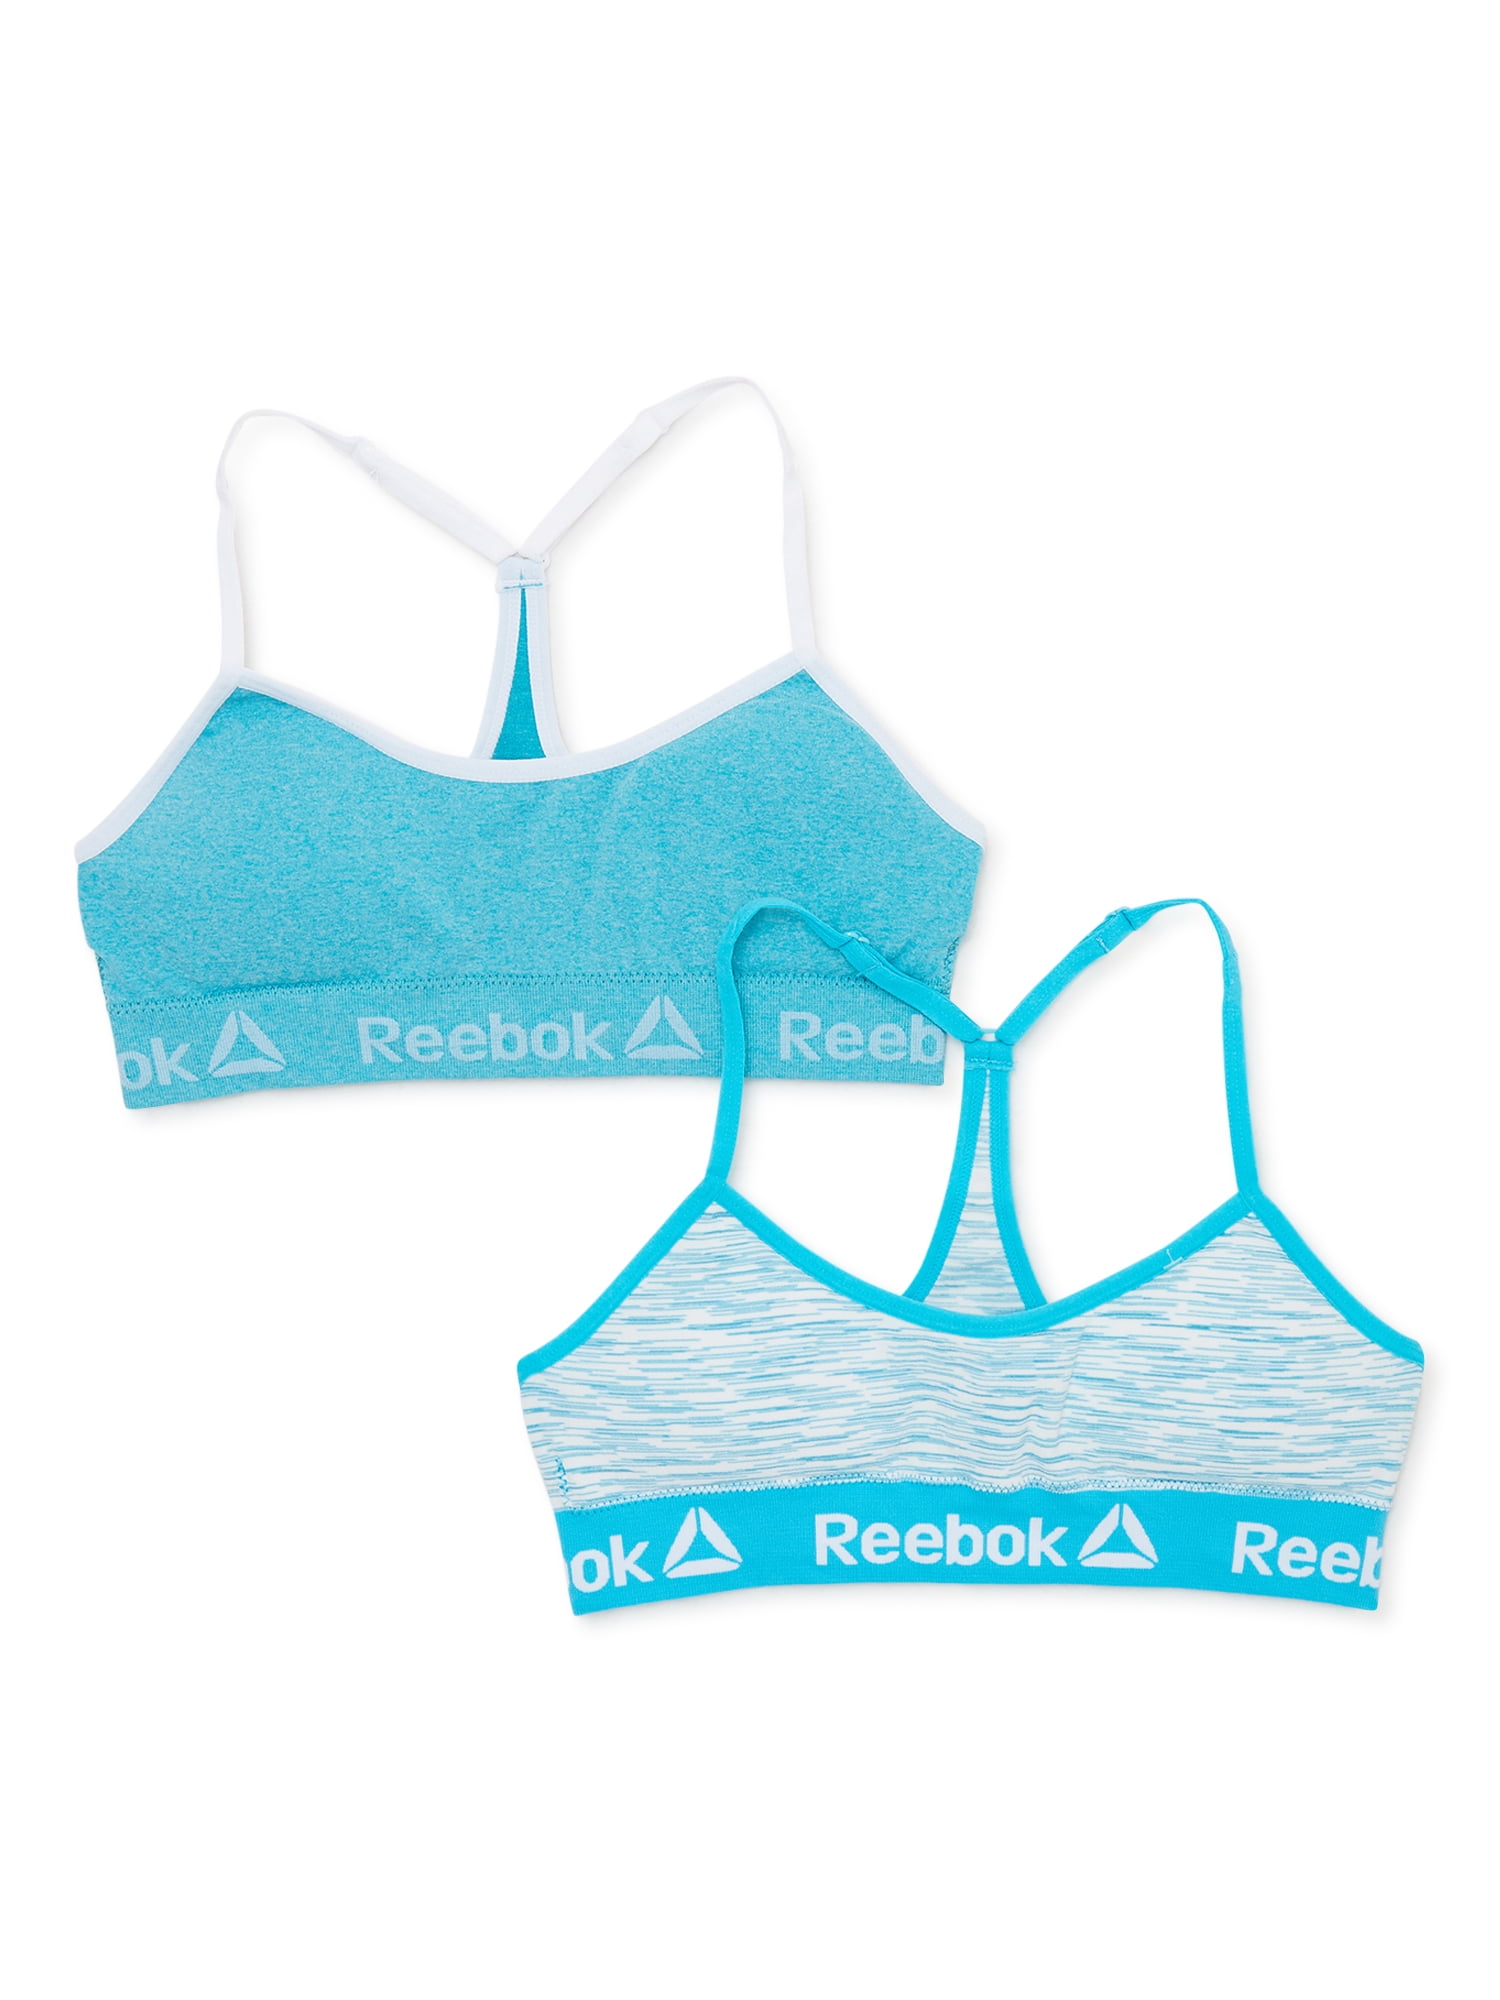 Reebok Girls Seamless Bras T-Back Bralettes, 2-Pack - Walmart.com